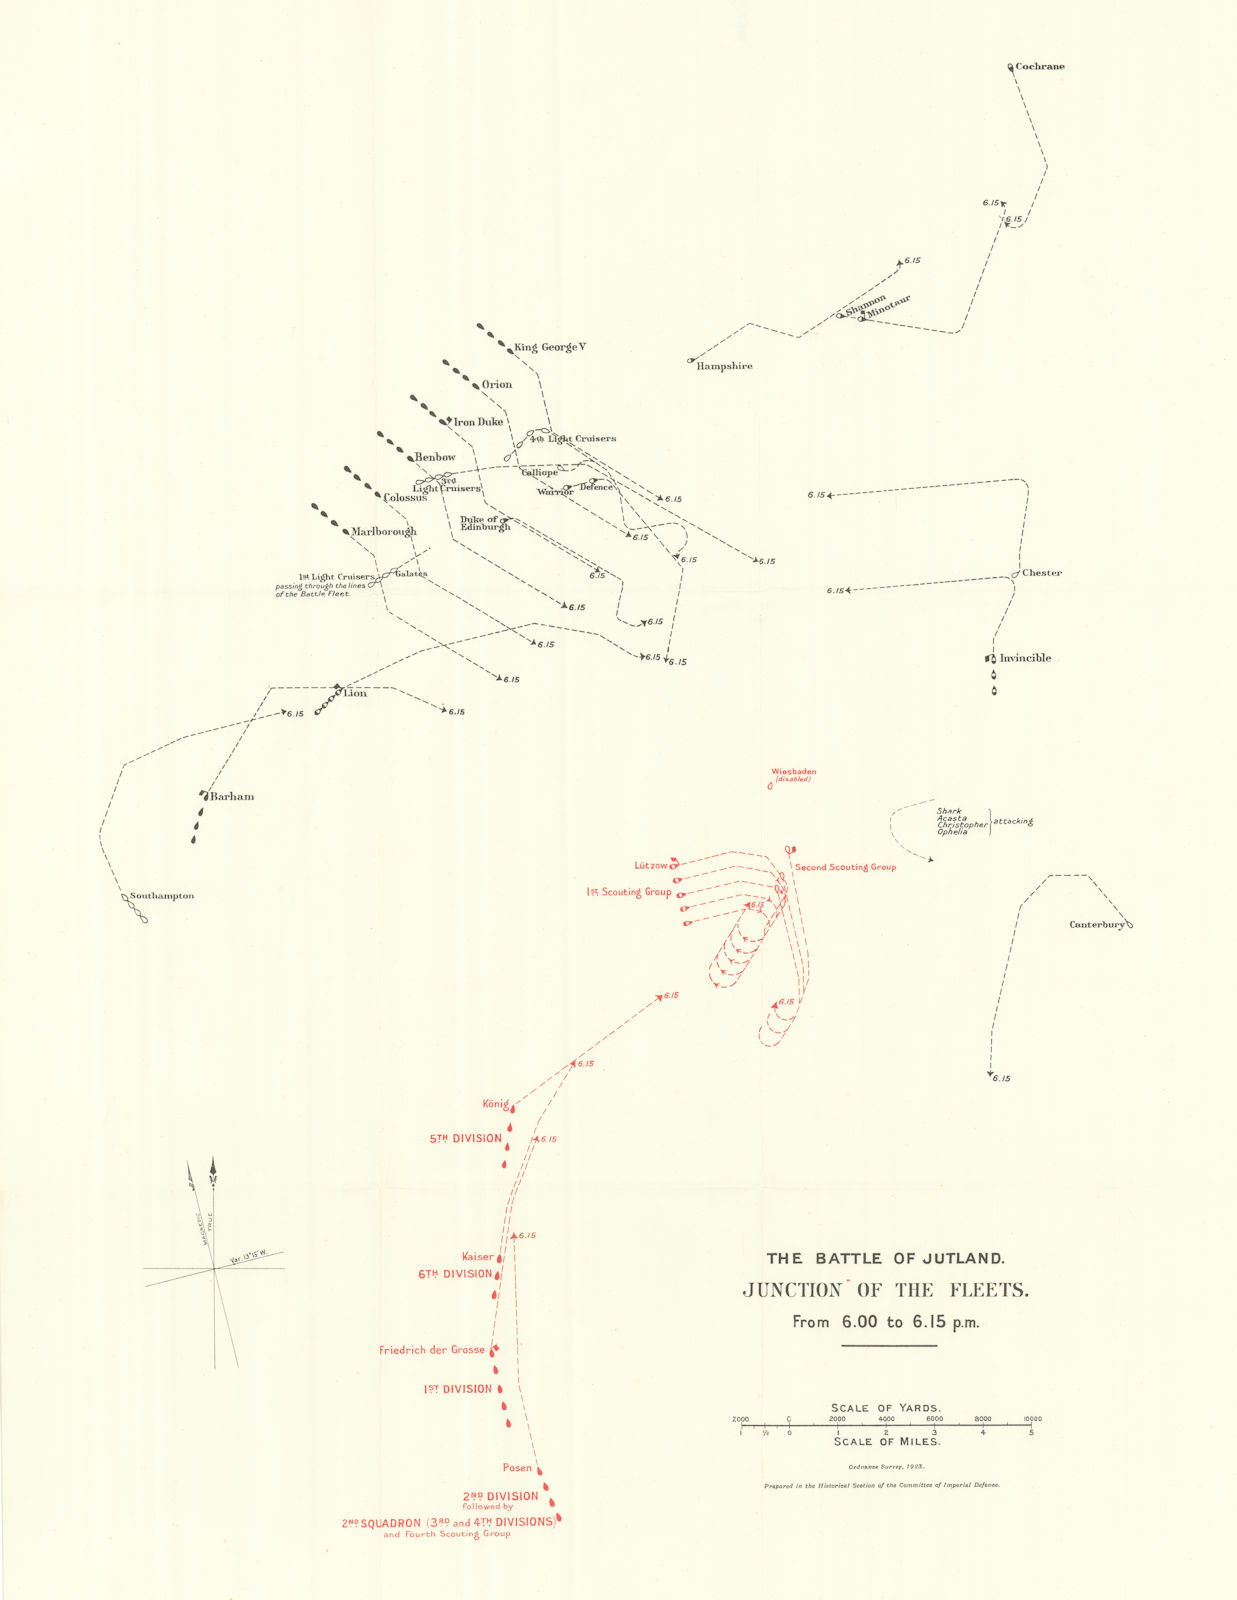 Battle of Jutland. Junction of Fleets. 6.00-6.15 pm 31 May 1916. WW1. 1923 map